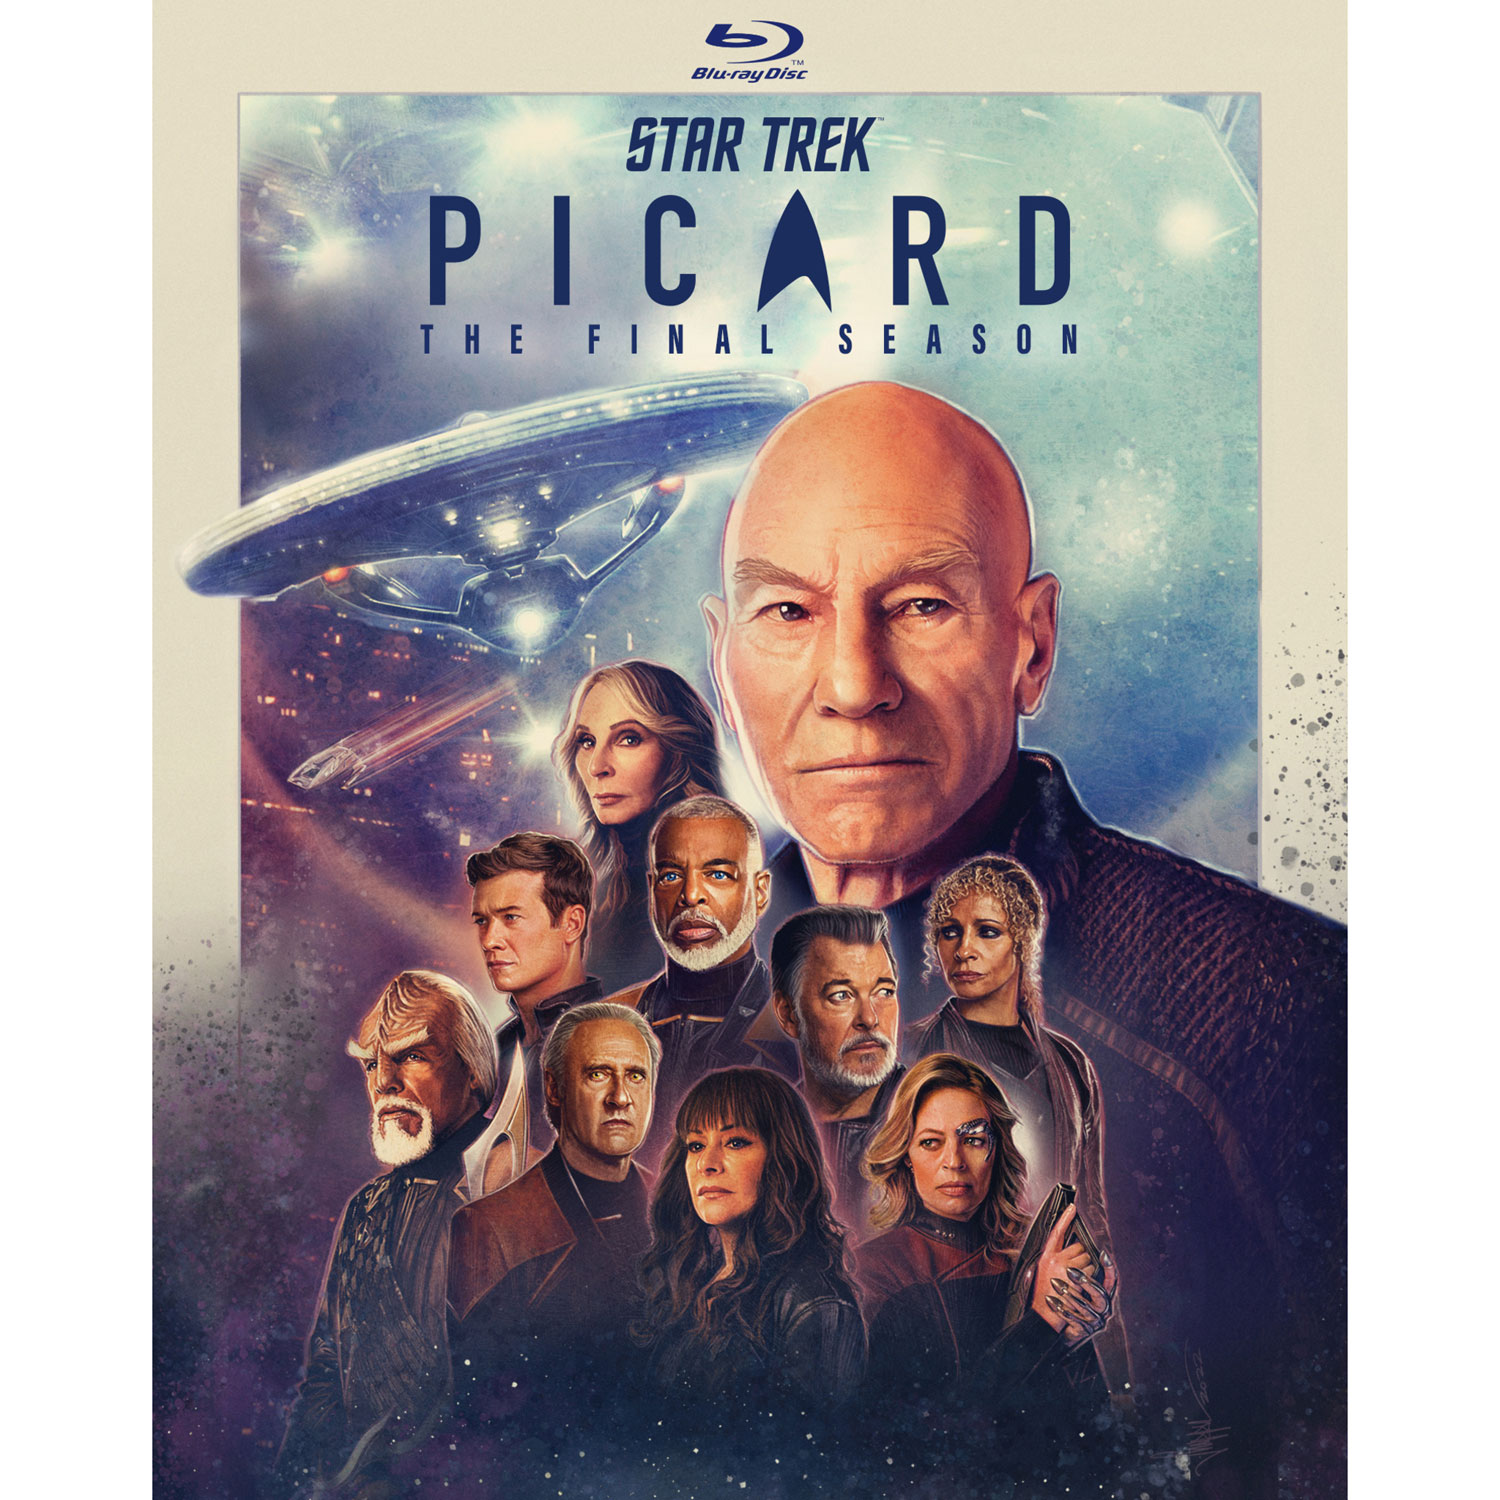 Star Trek: Picard The Final Season (English) (Blu-ray) (2022)